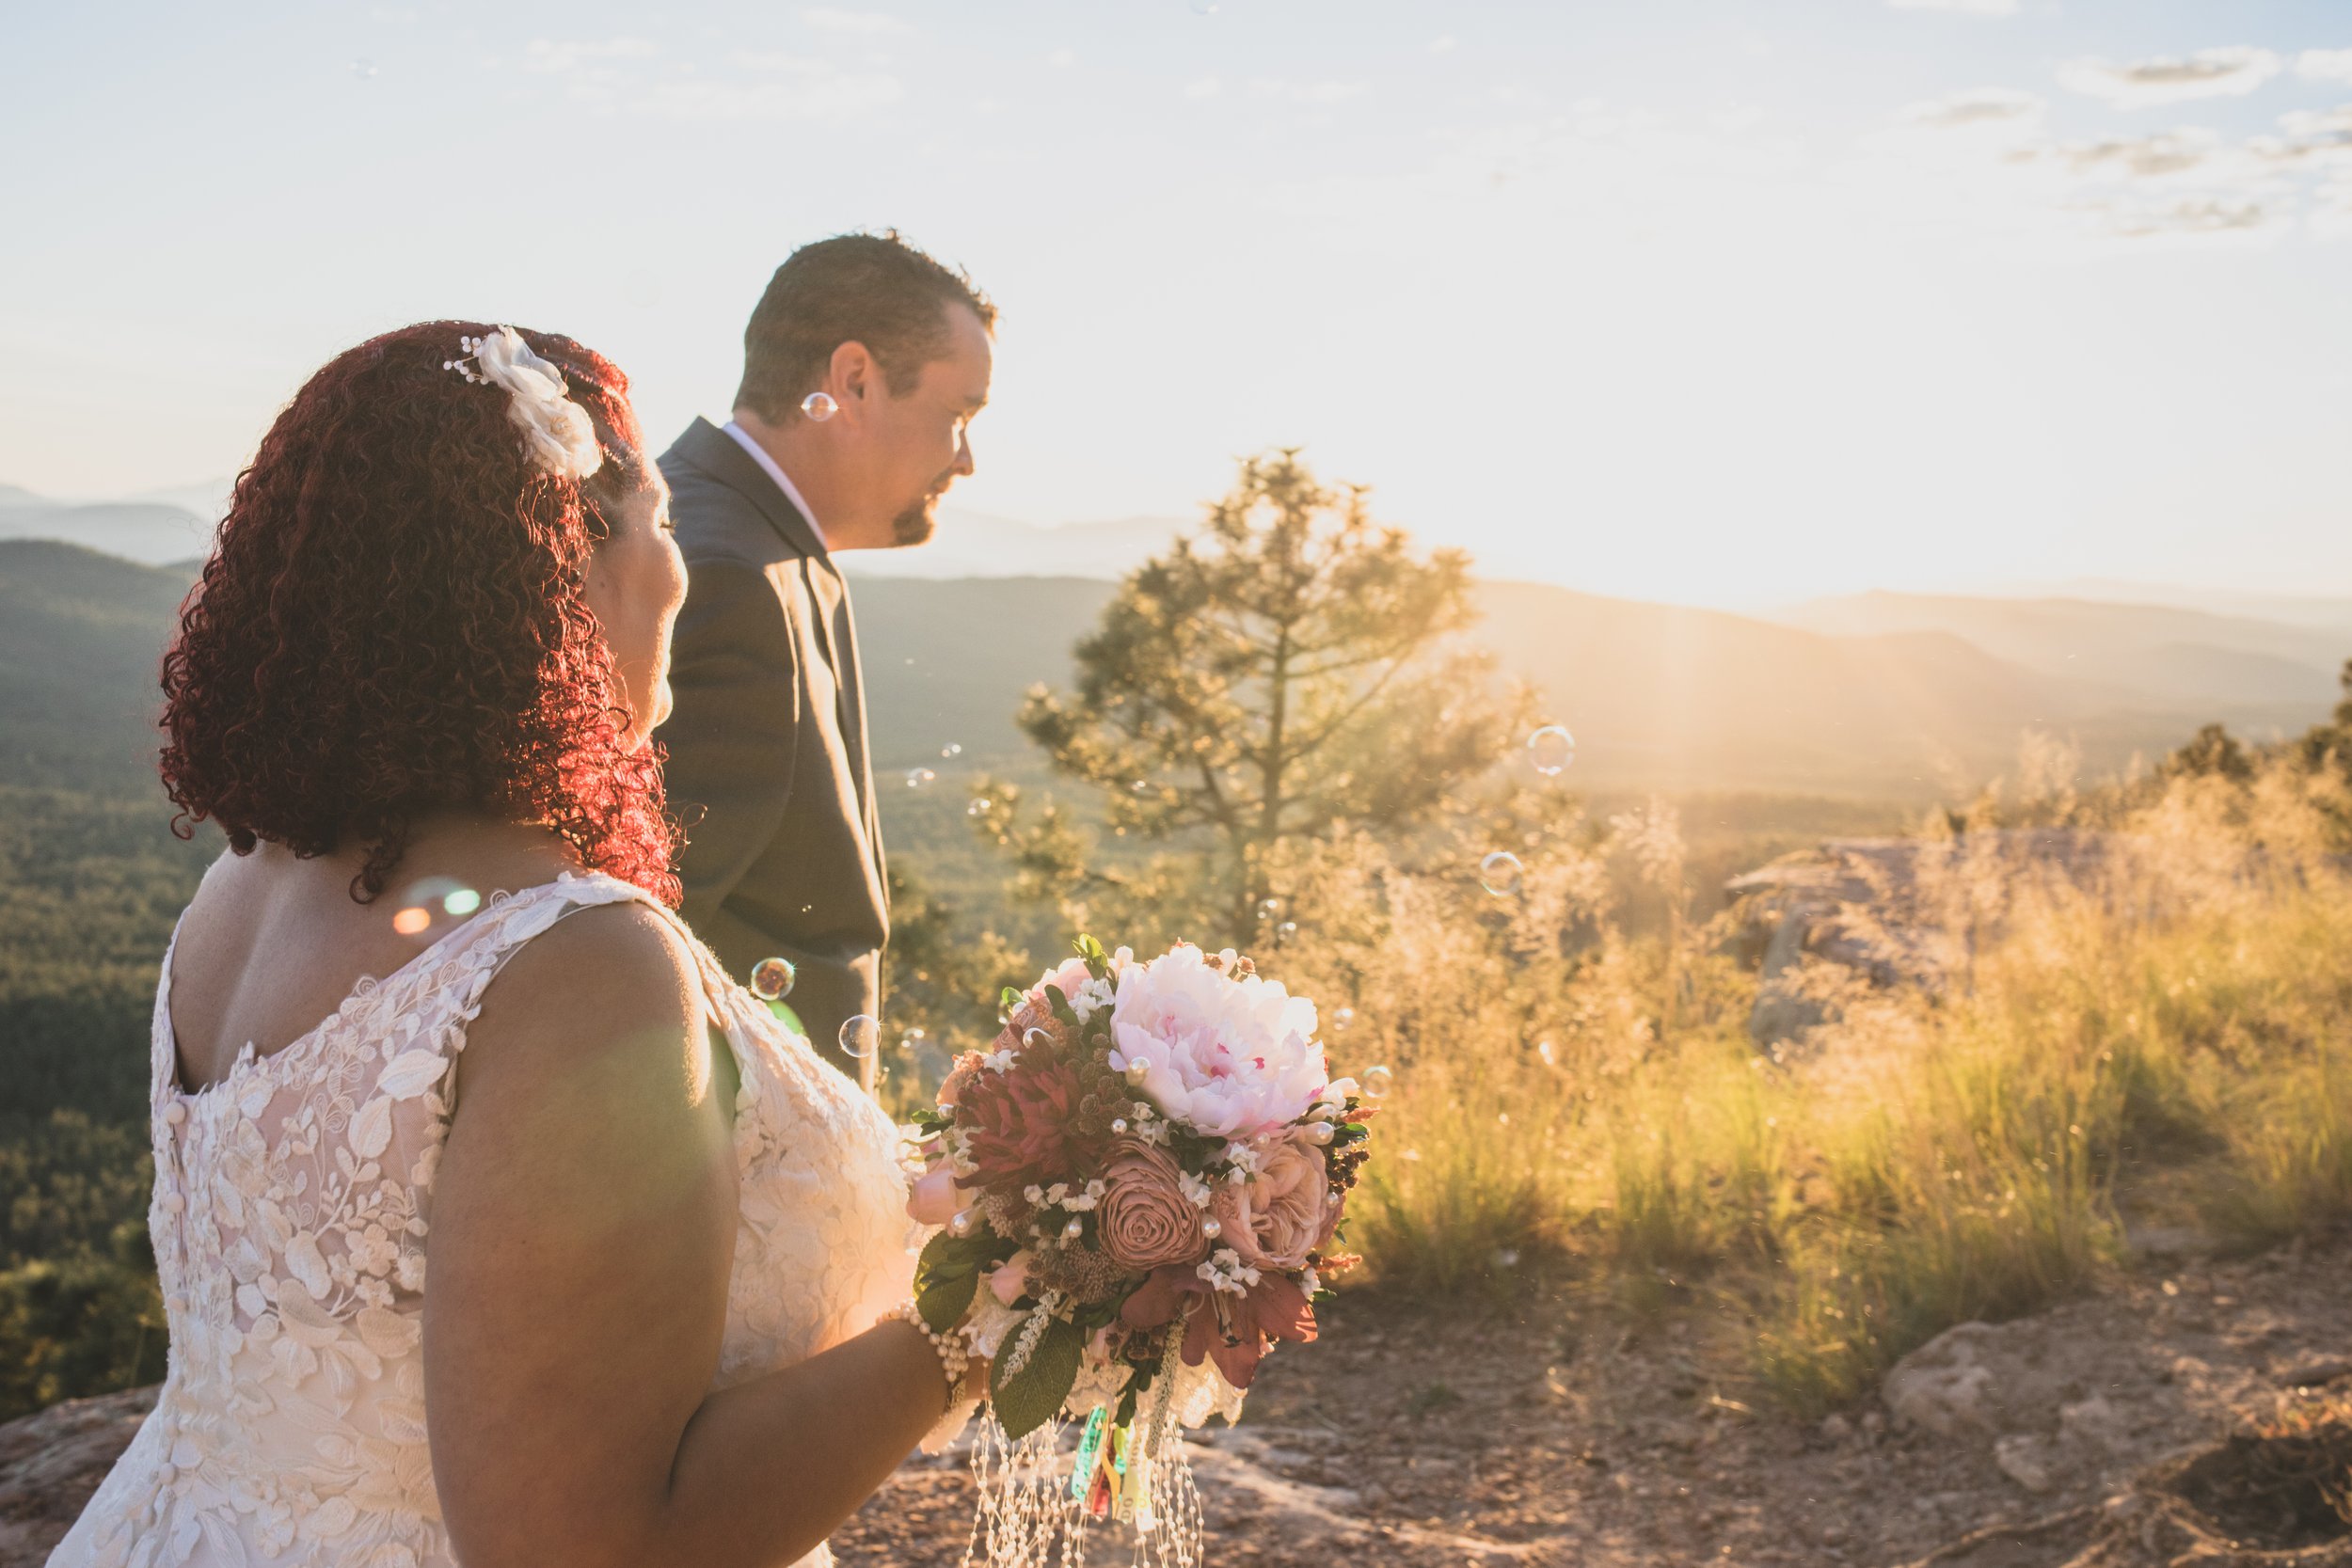  Couple at Northern Arizona Rim Elopement by Northern Arizona Photographer Jennifer Lind Schutsky 